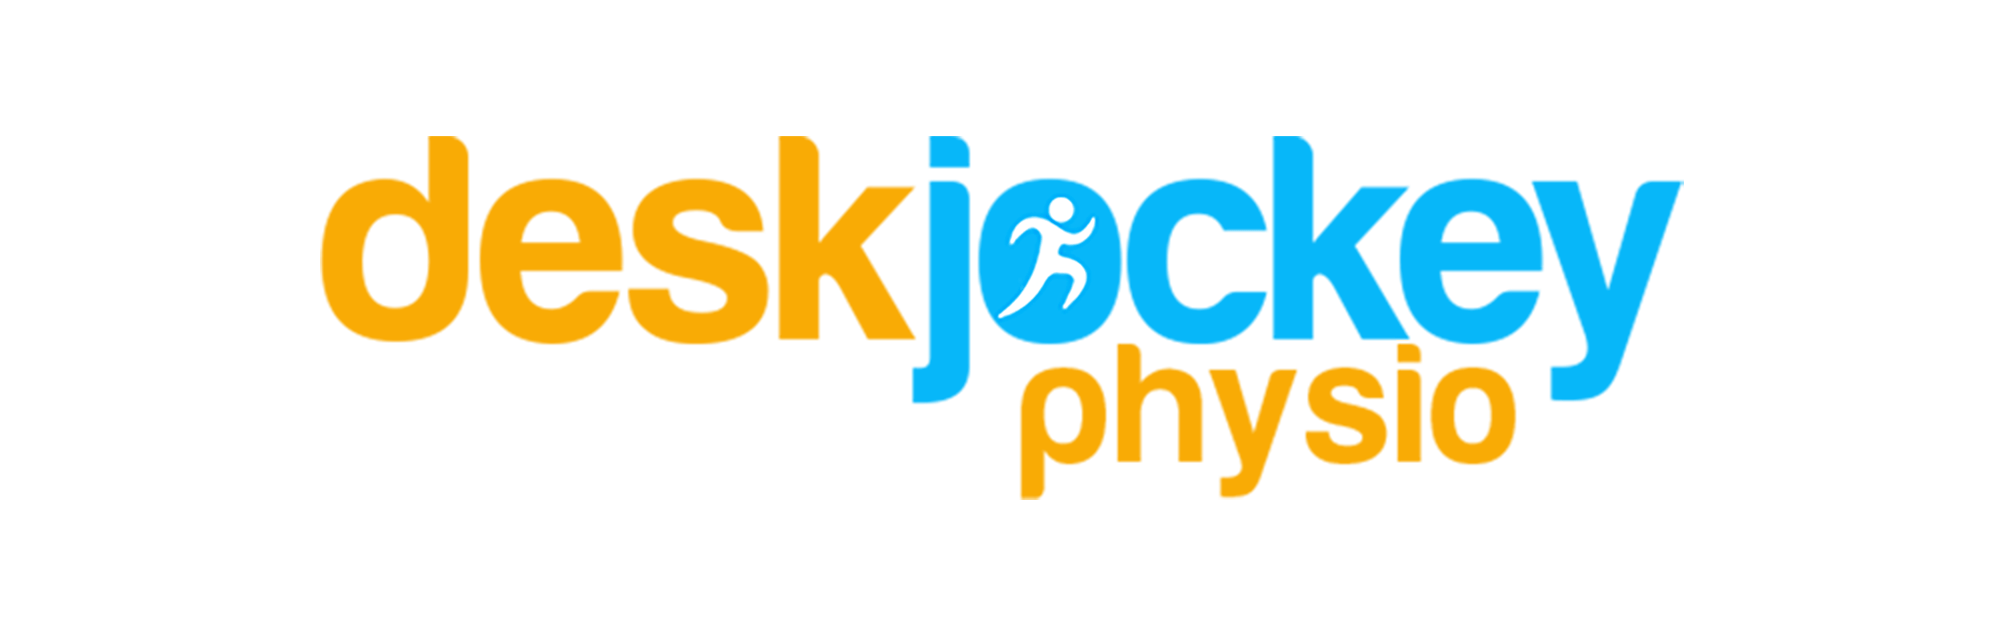 Desk Jockey Physio